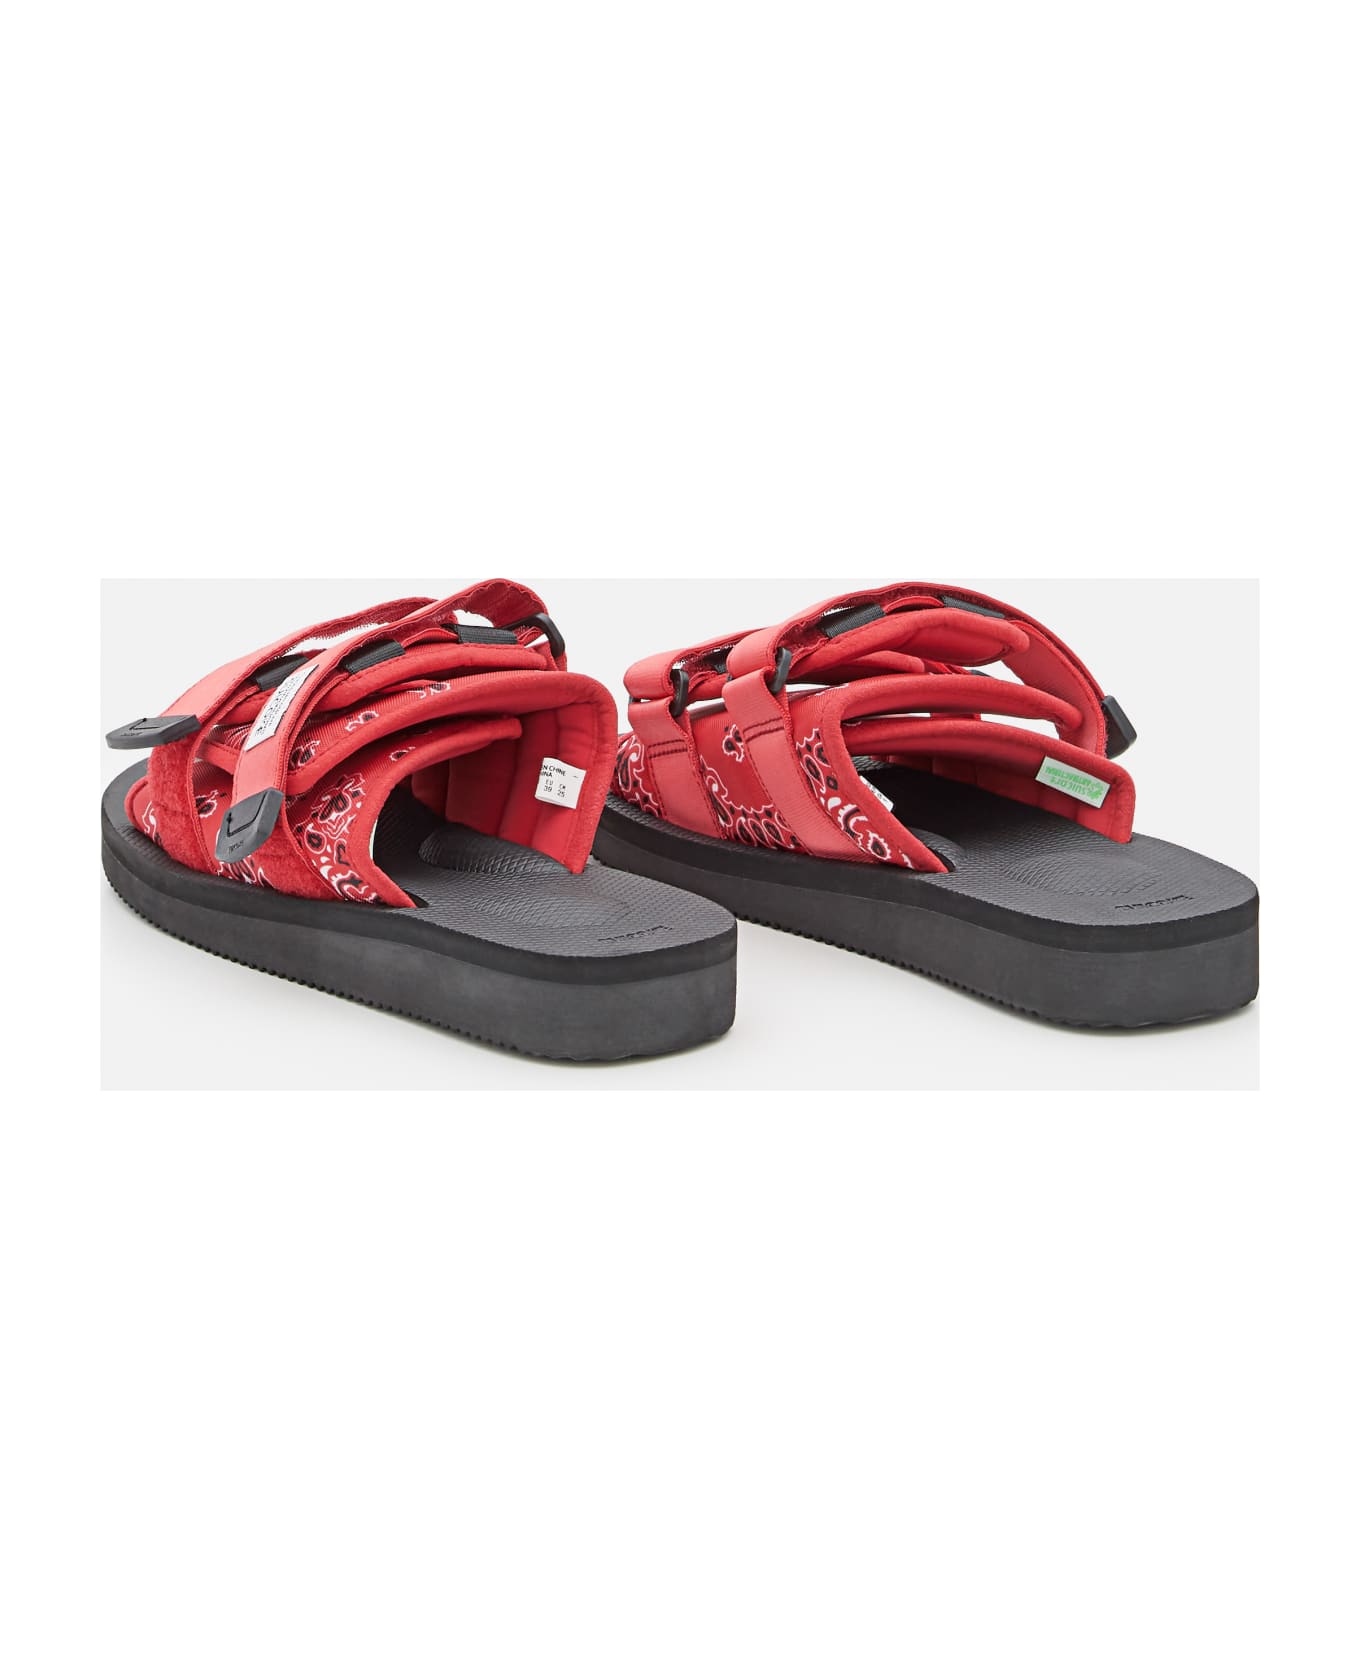 SUICOKE Moto Platform Sandals - Red